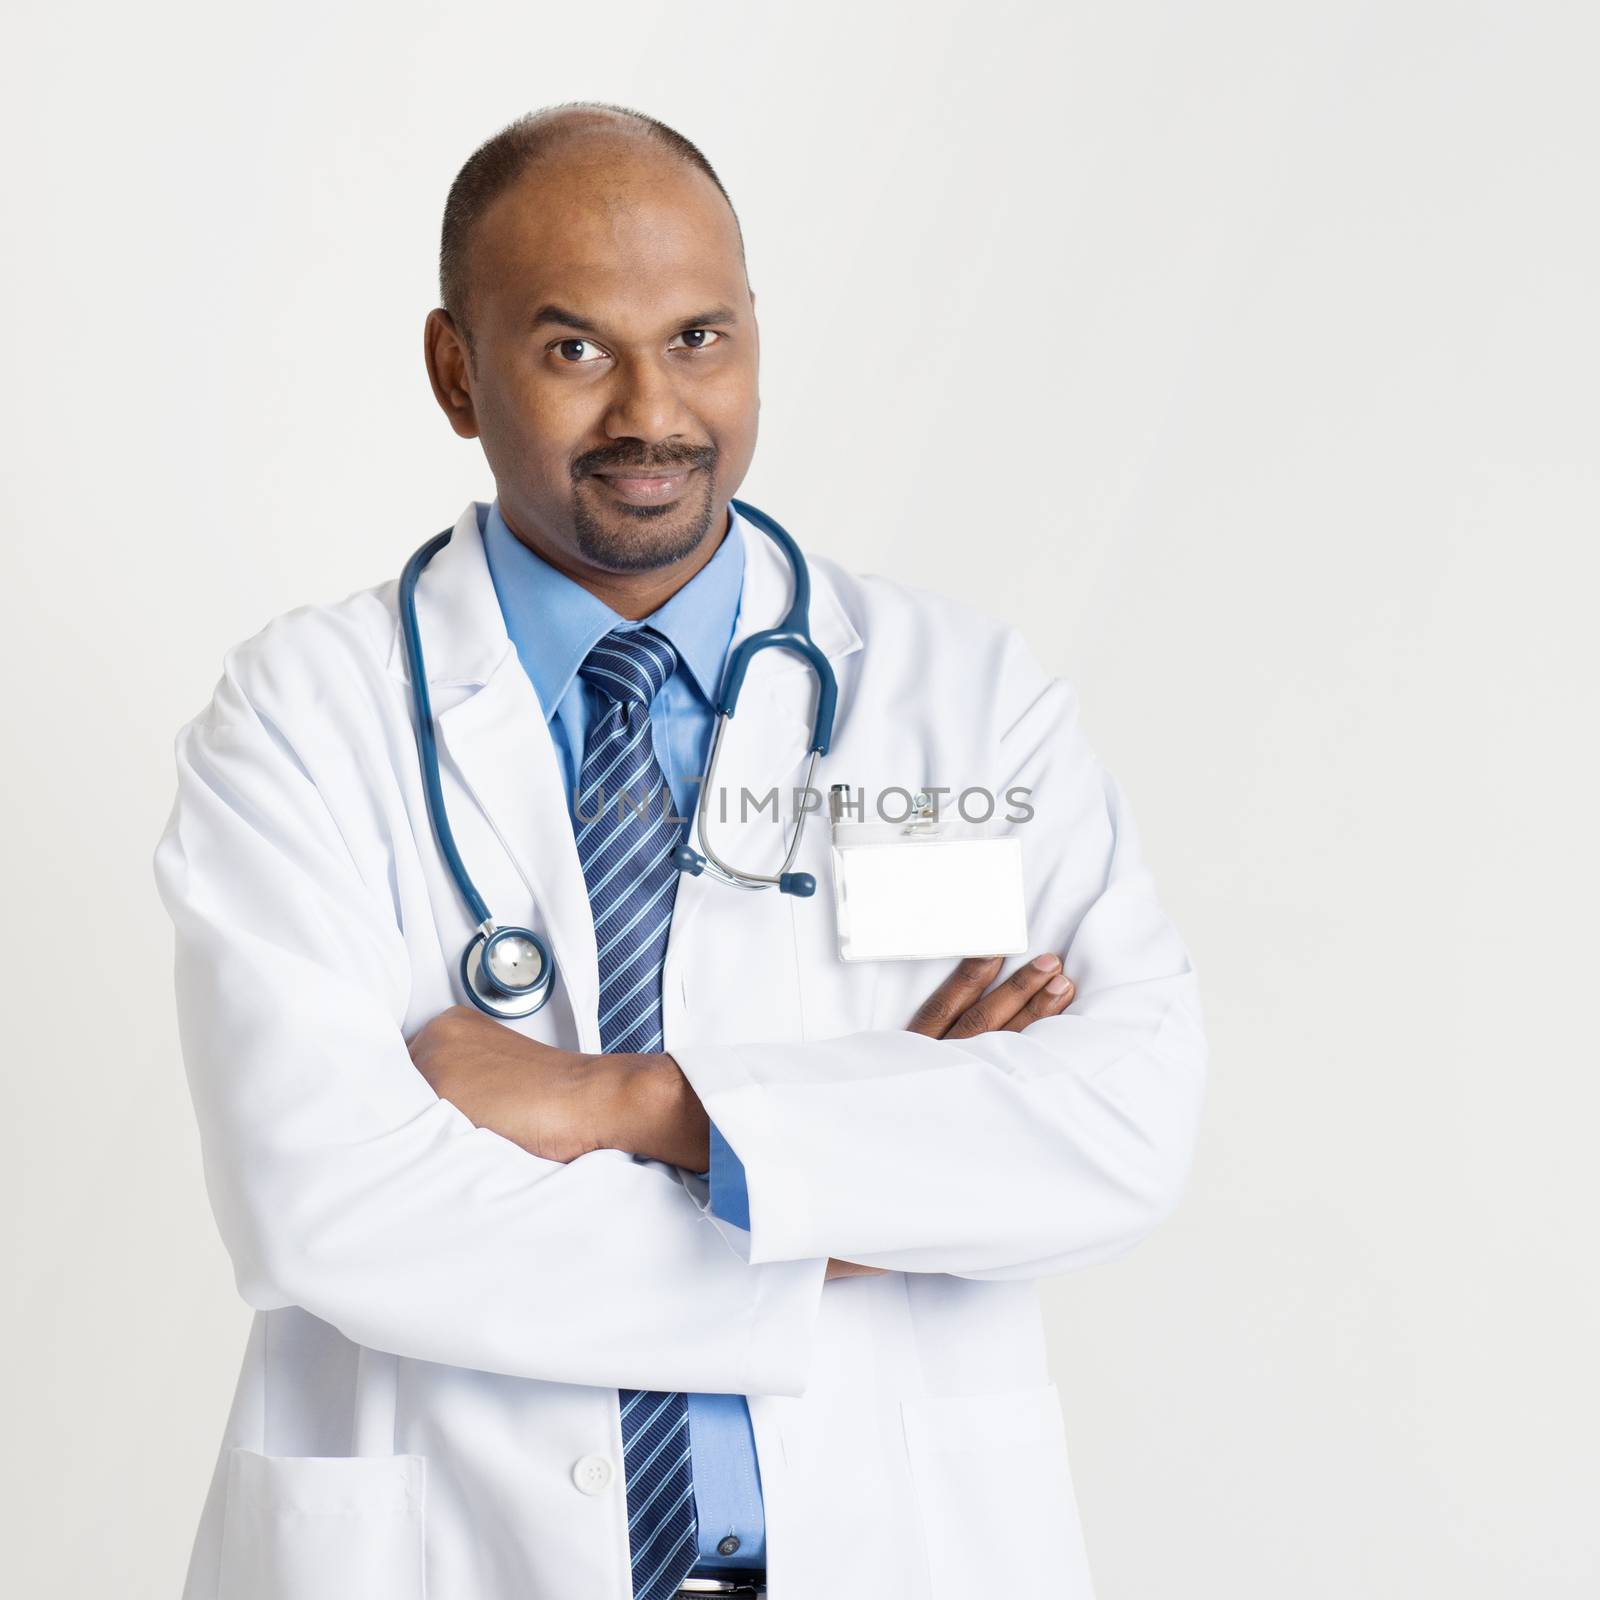 Mature Indian doctor portrait by szefei